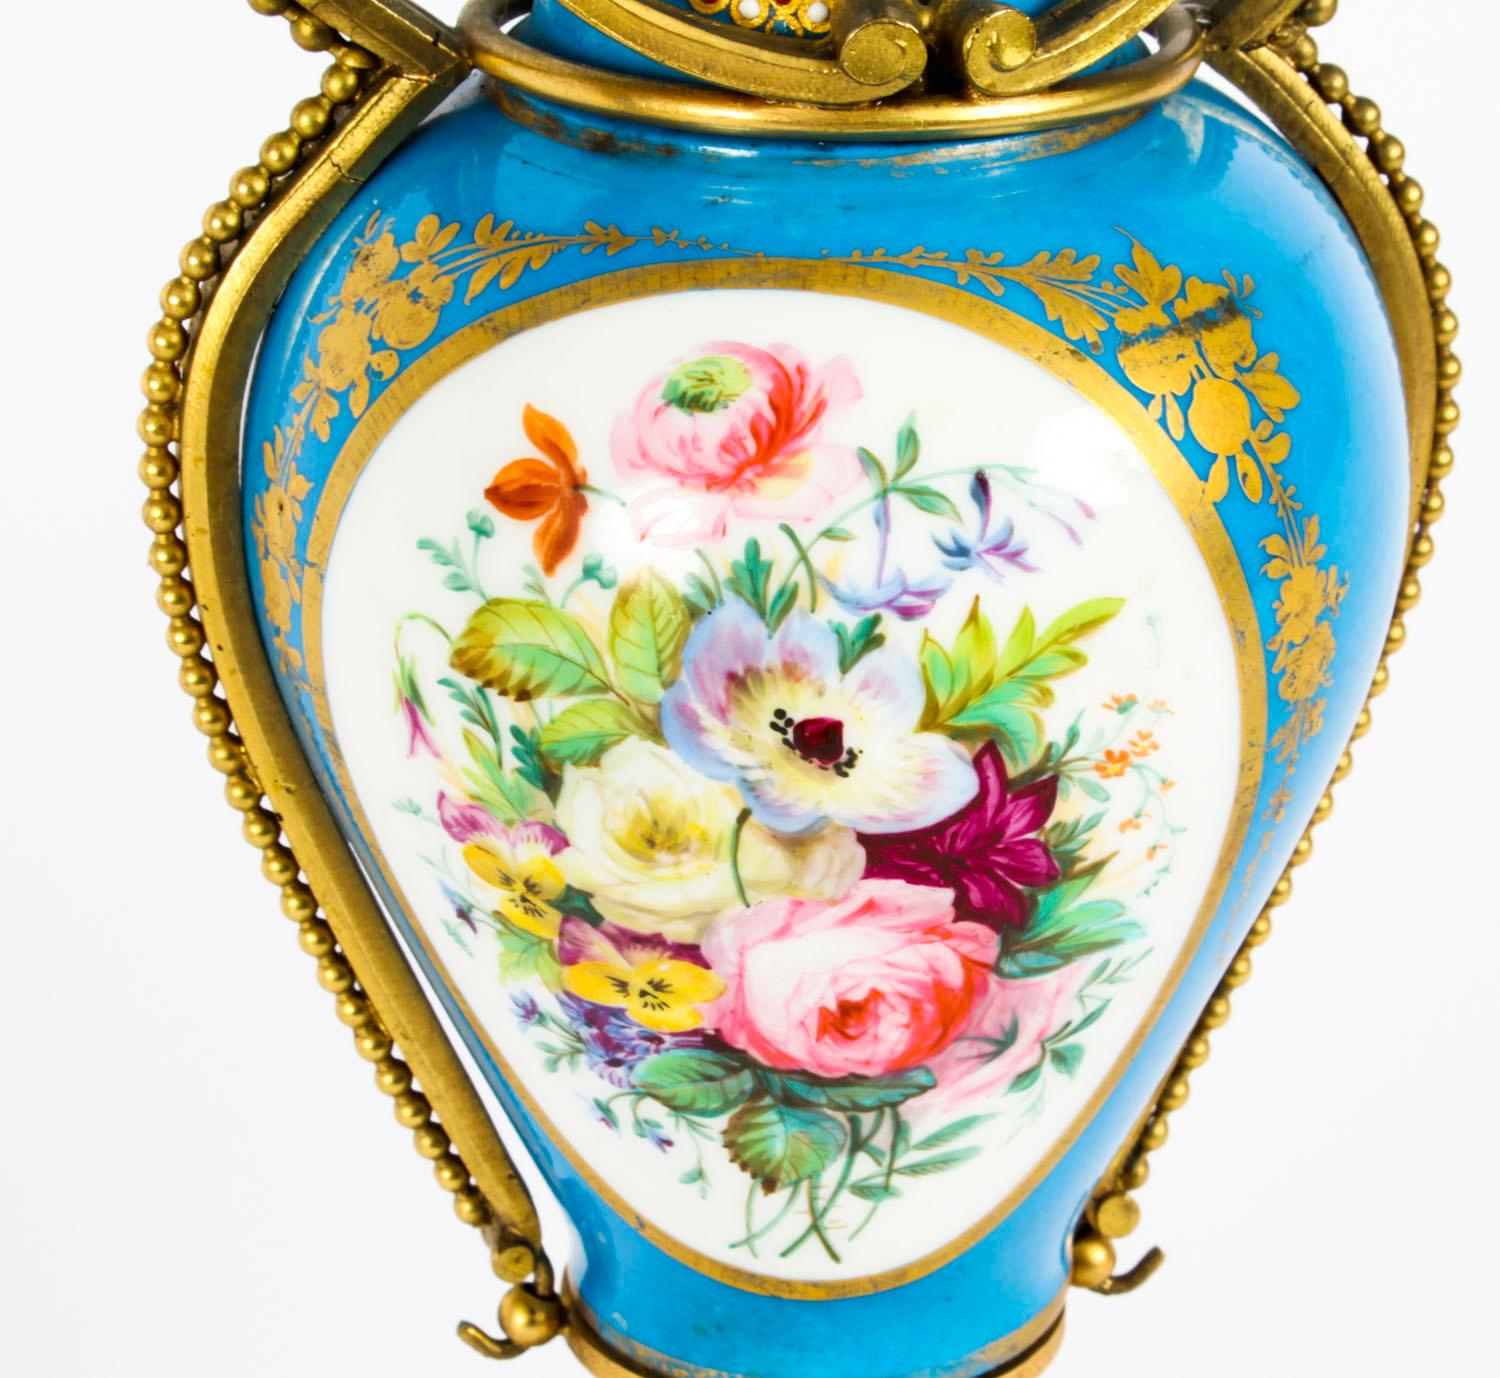 Antique Pair of French Ormolu Mounted Bleu Celeste Sèvres Vases, 19th Century For Sale 4